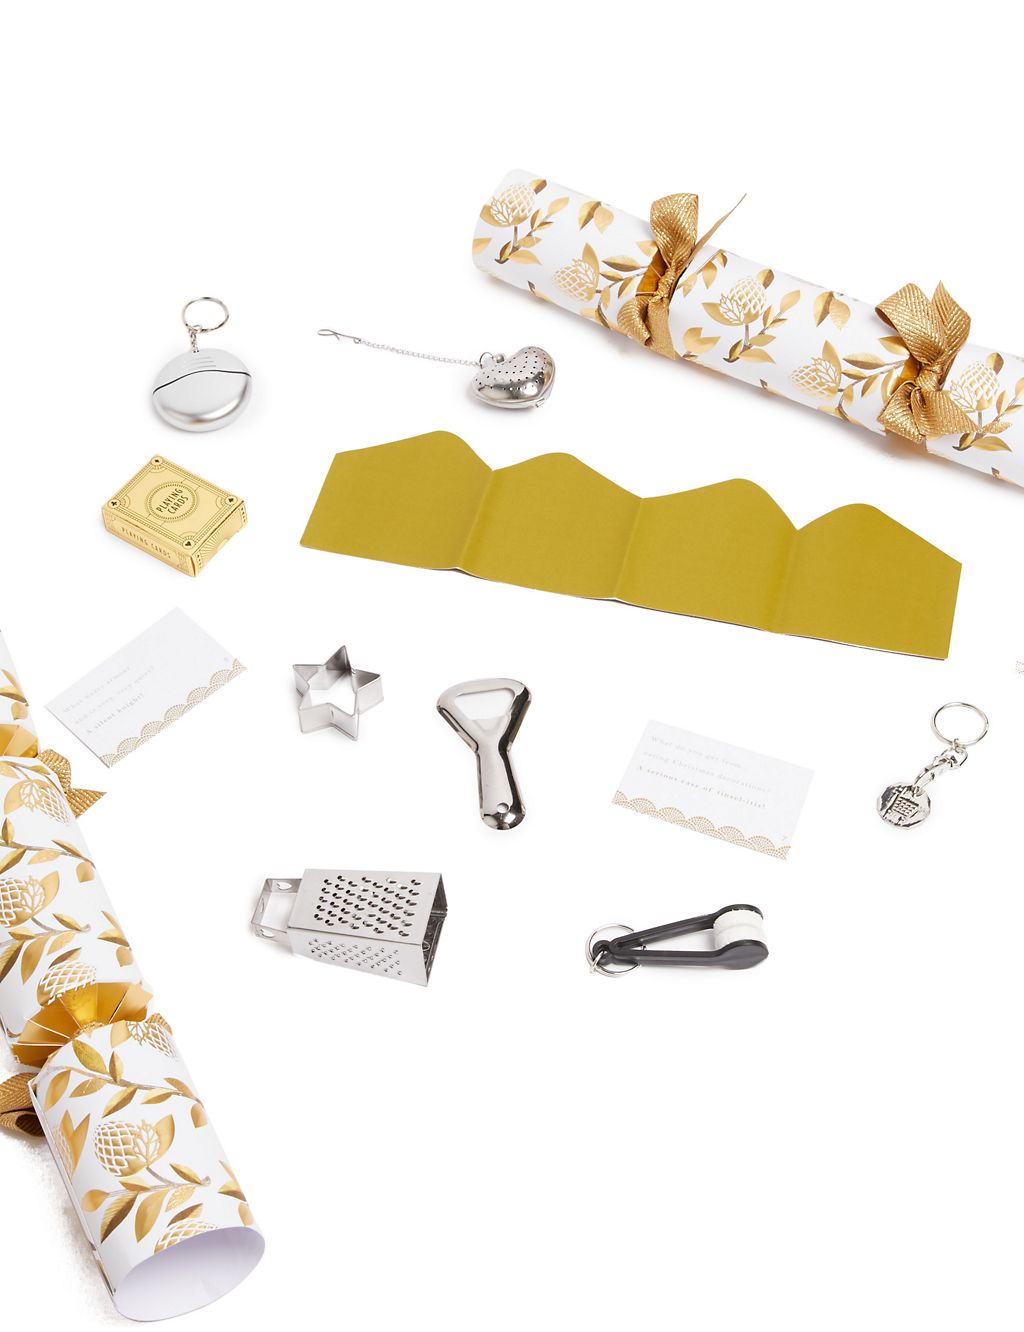 Luxury Acorn Print Christmas Crackers - Pack of 8 in 1 Design 1 of 4